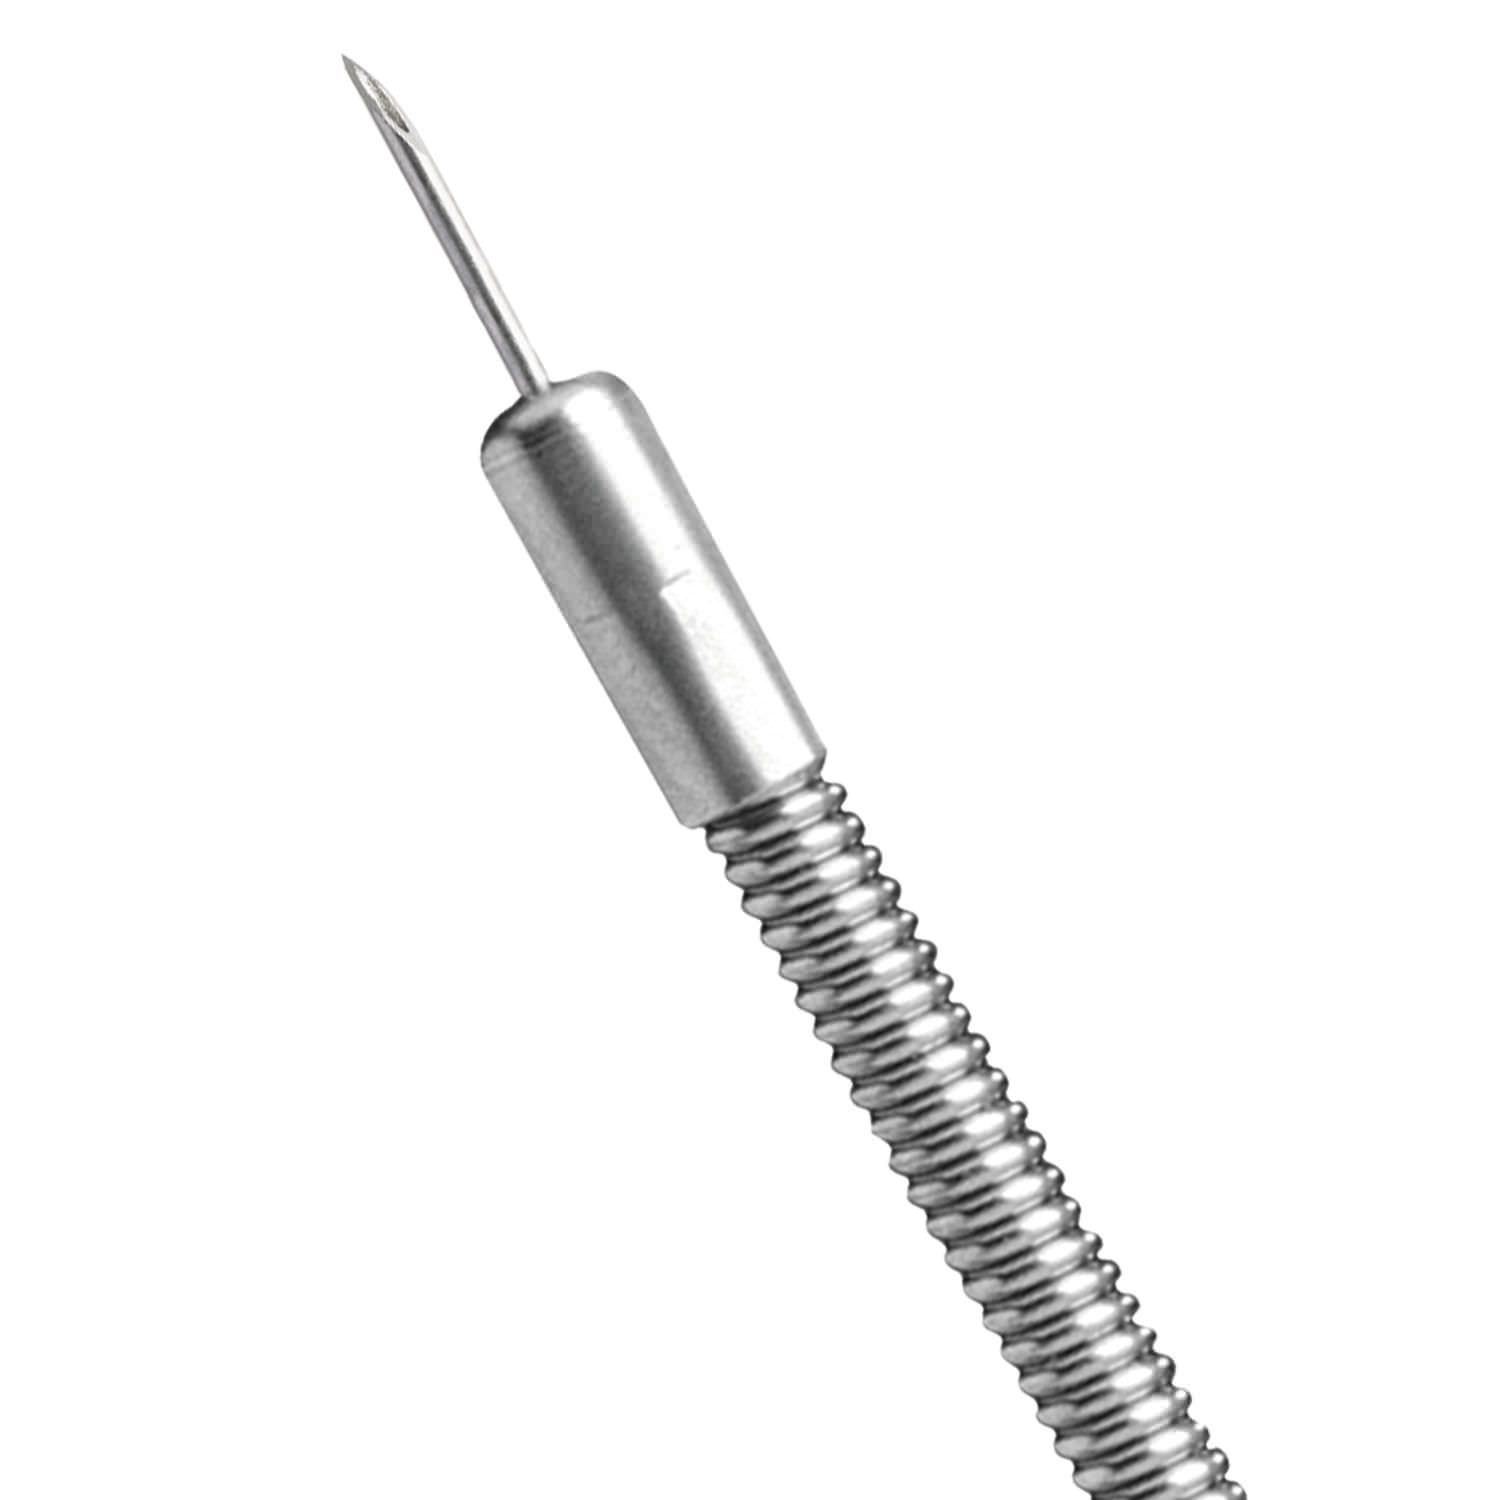 Exploration needle catheter / endoscopic US endoscopy